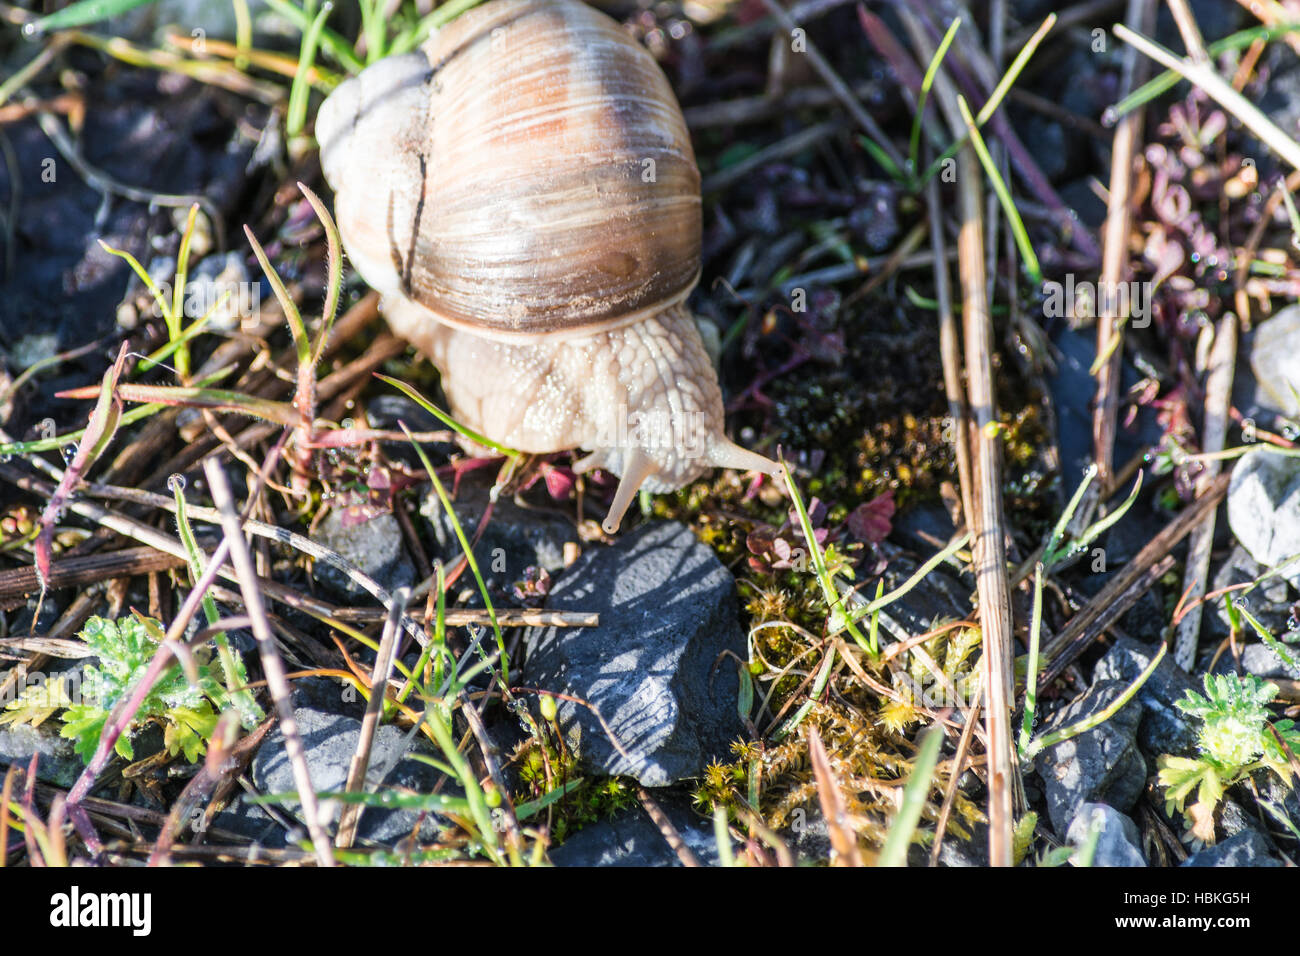 Edible snail in their natural habitat Stock Photo